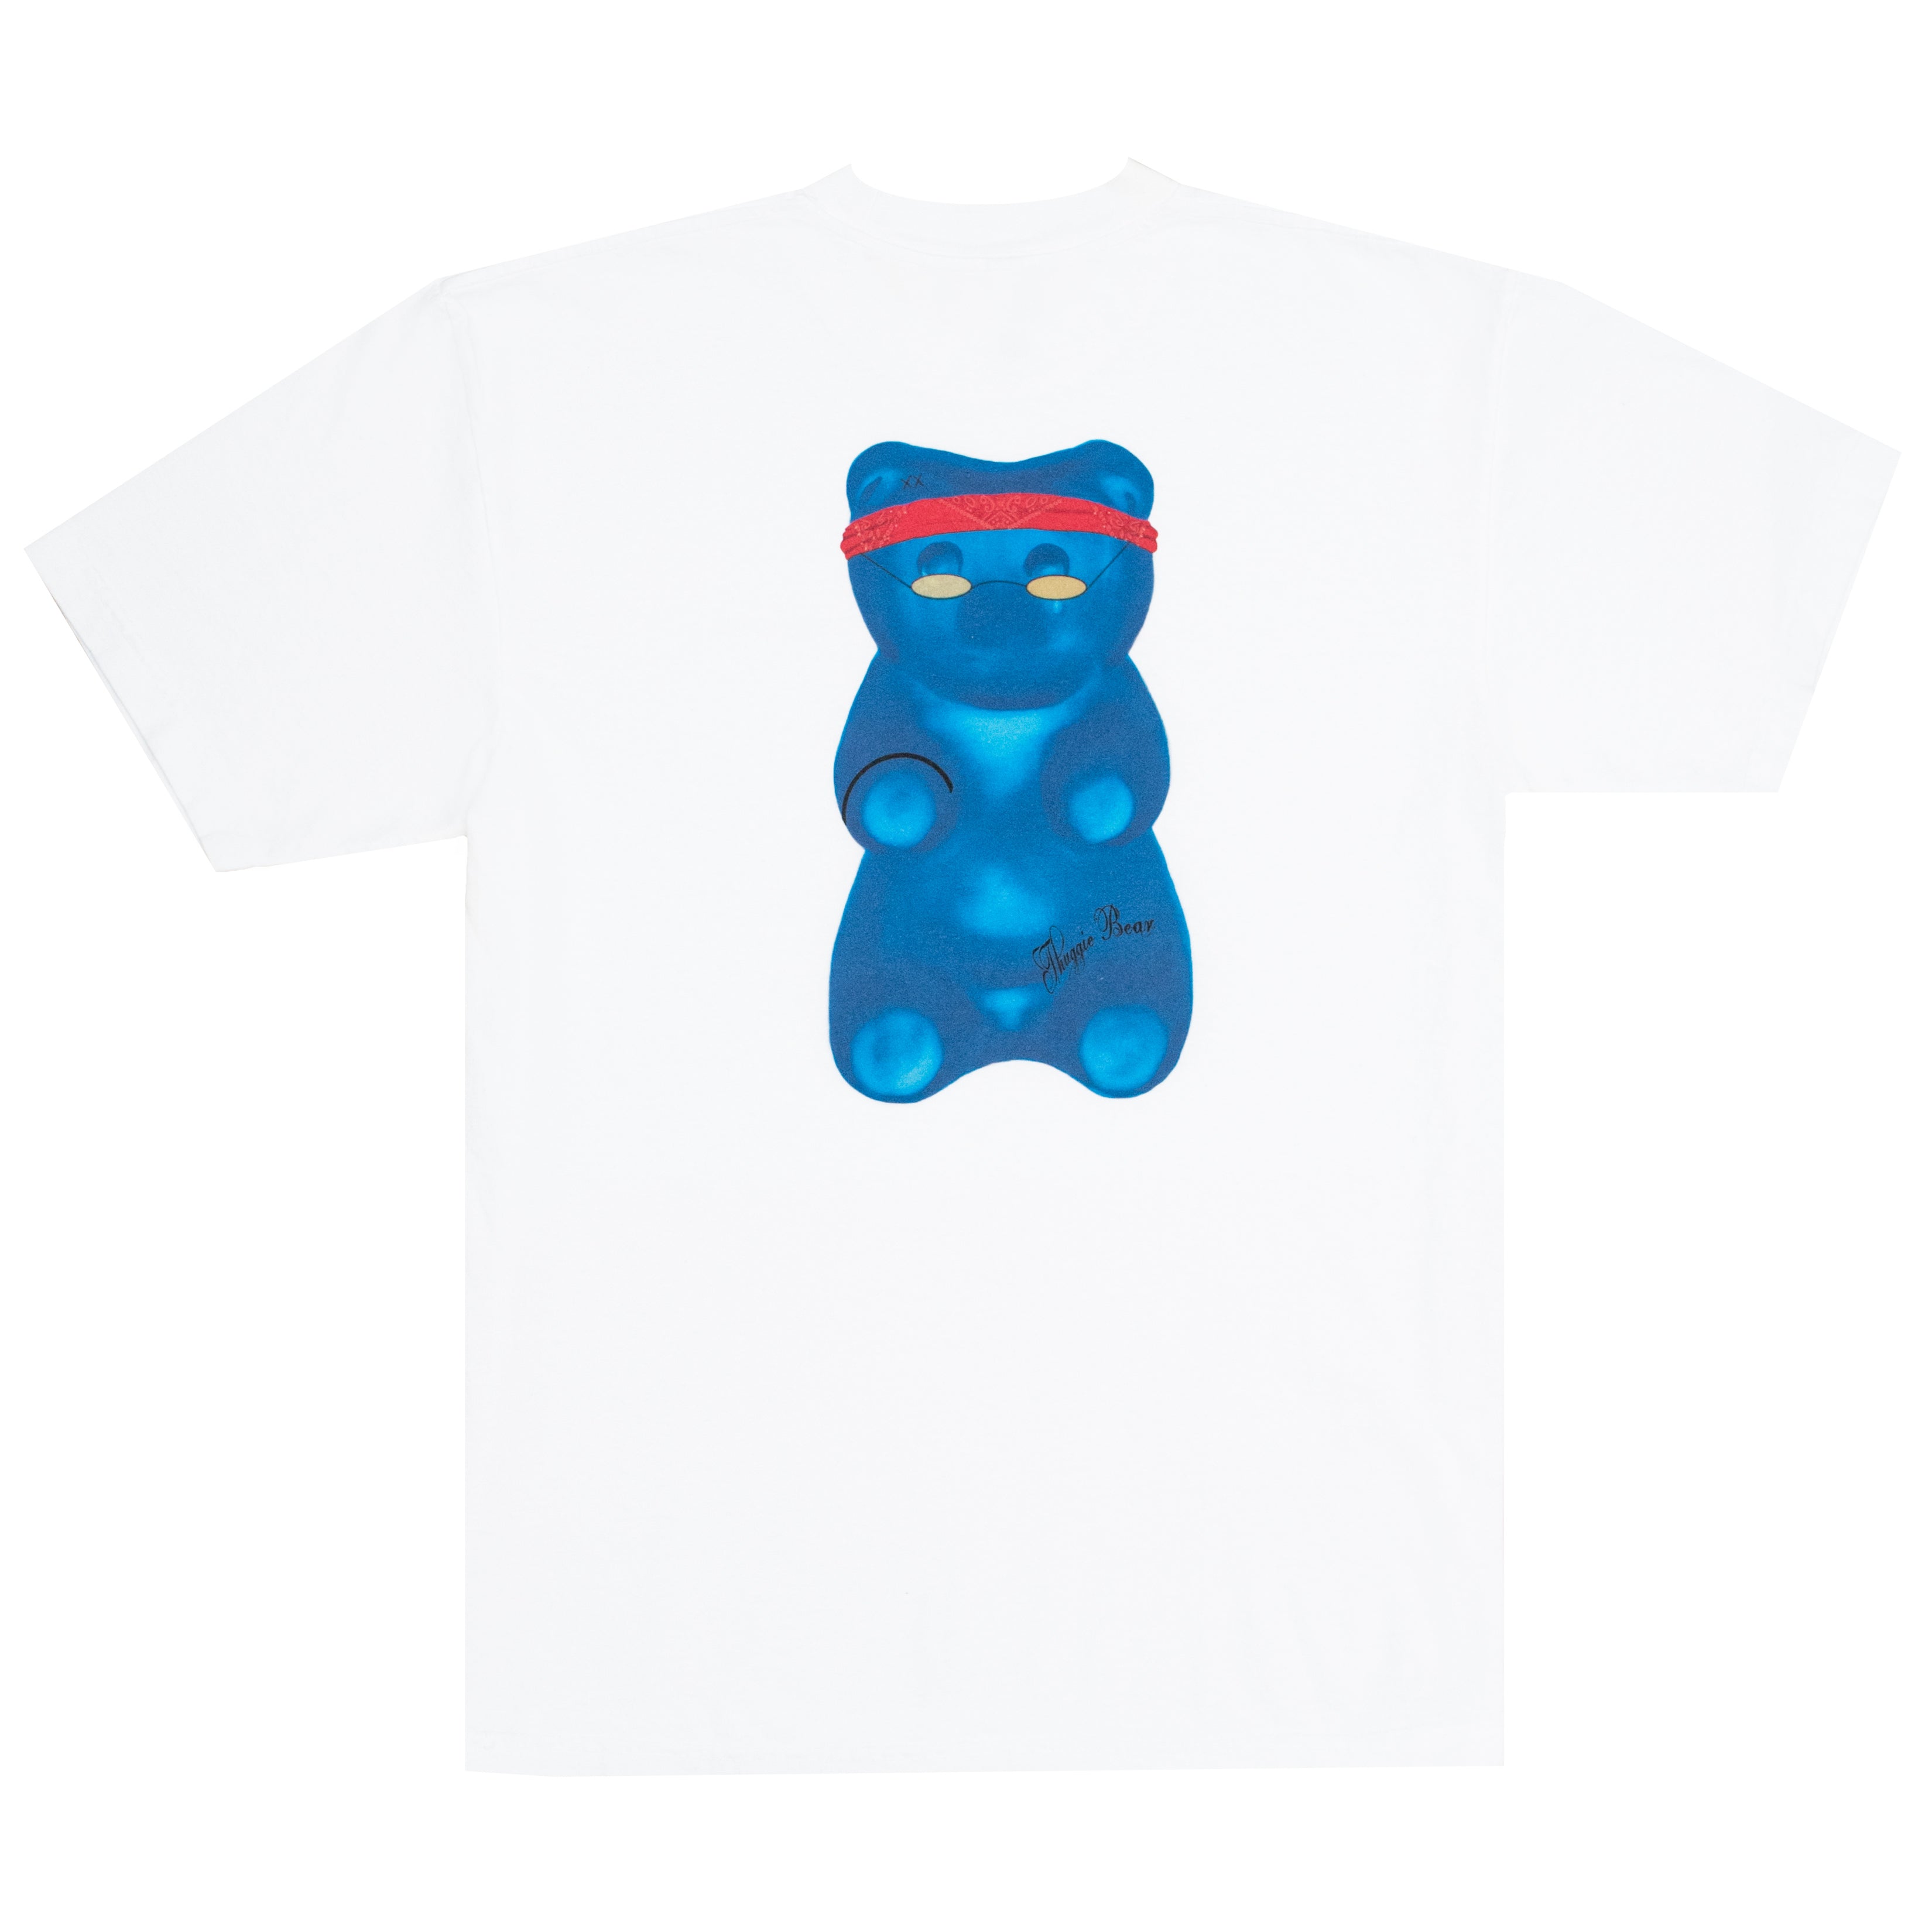 Supreme Lv Teddy Bear T Shirts